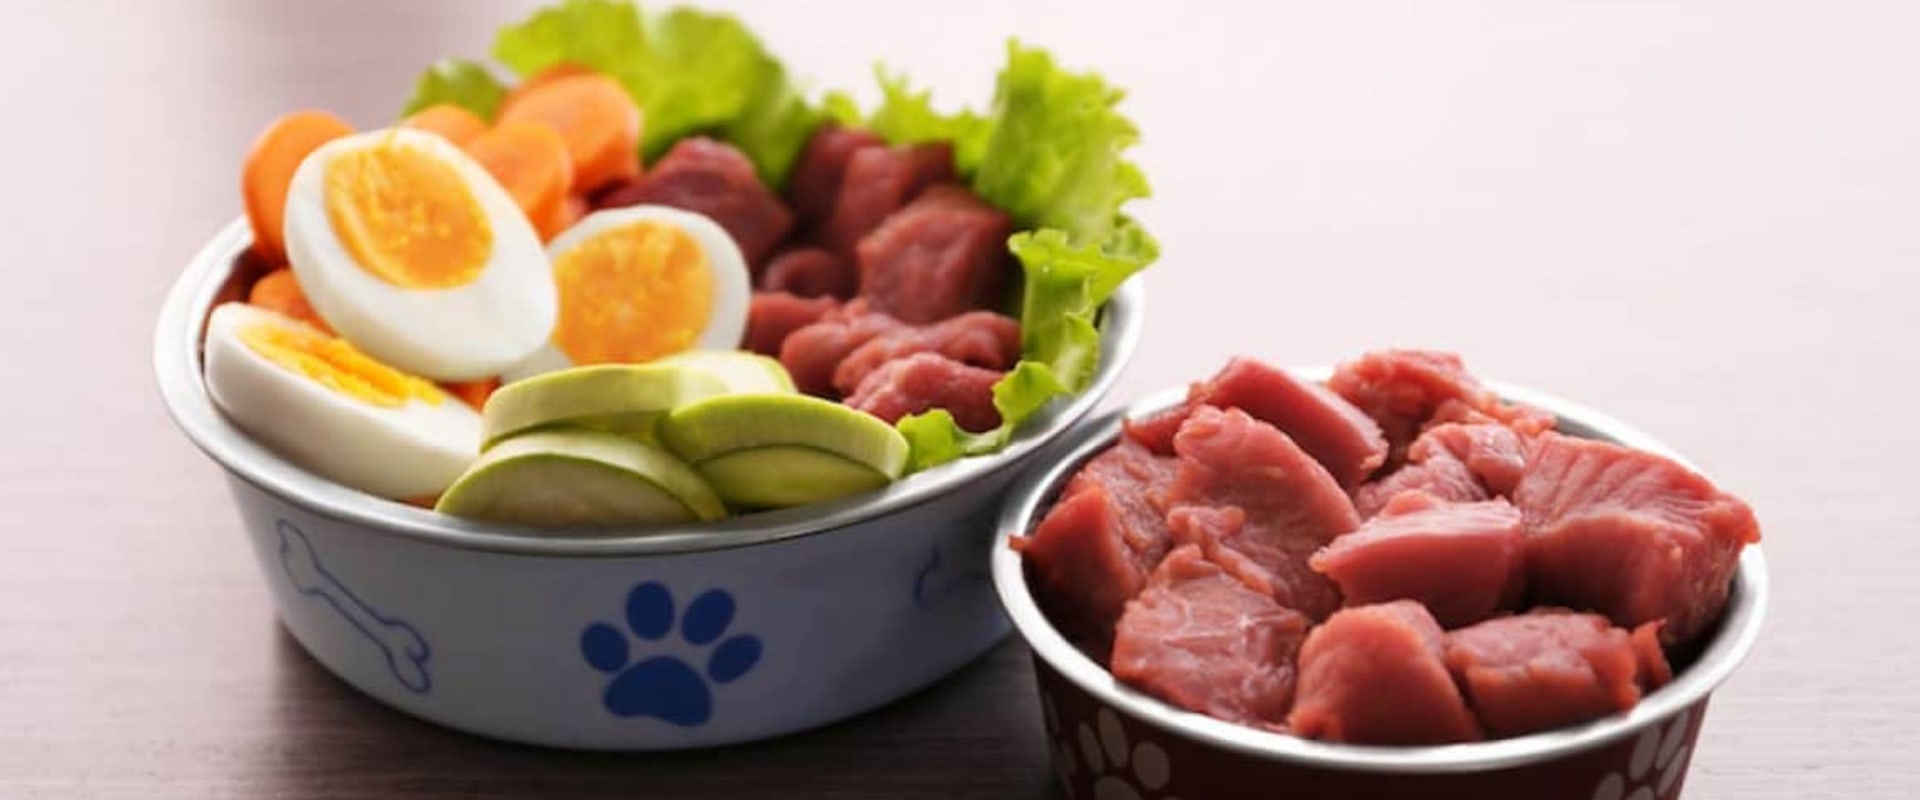 Is raw dog food best?